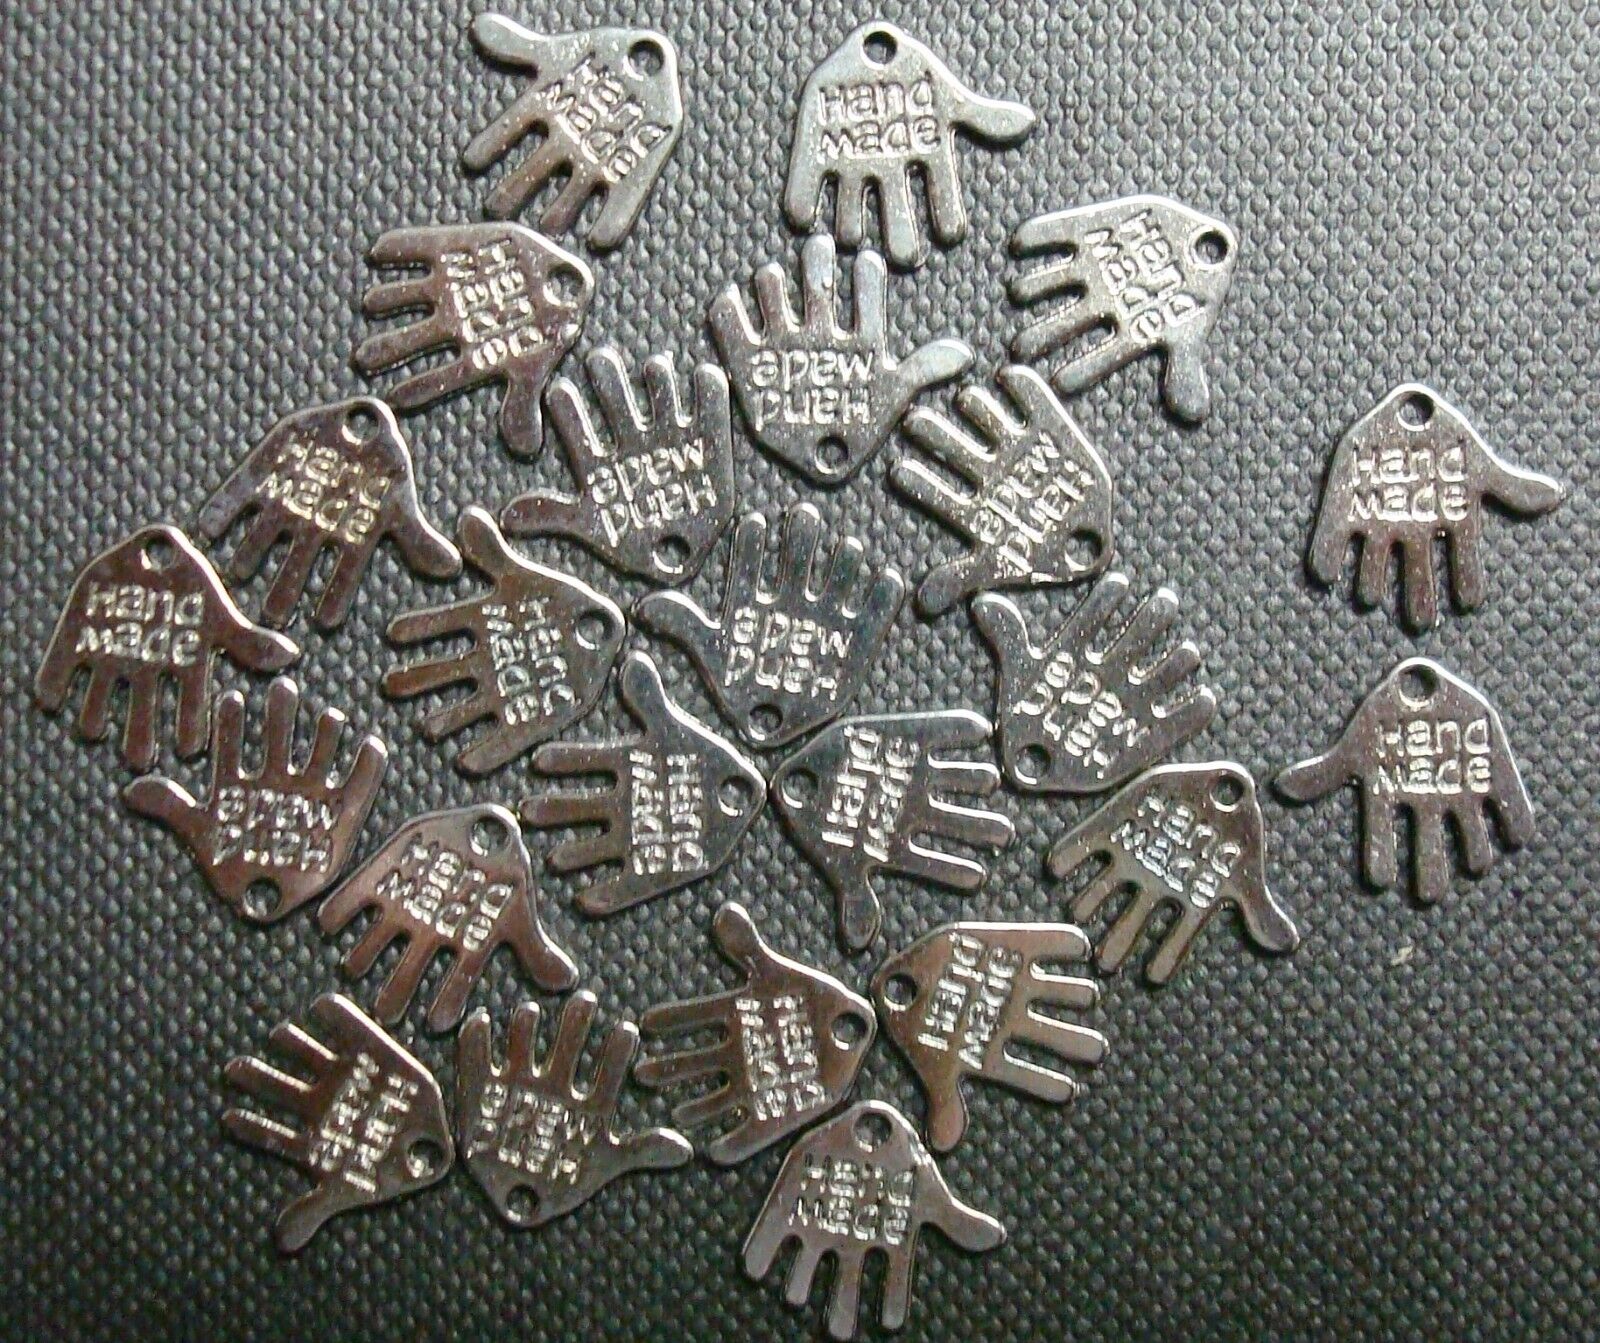 24 Black plated hand made jewelry signature tags earring charms pendant CFP059B Silversmithsupply.com - фотография #3